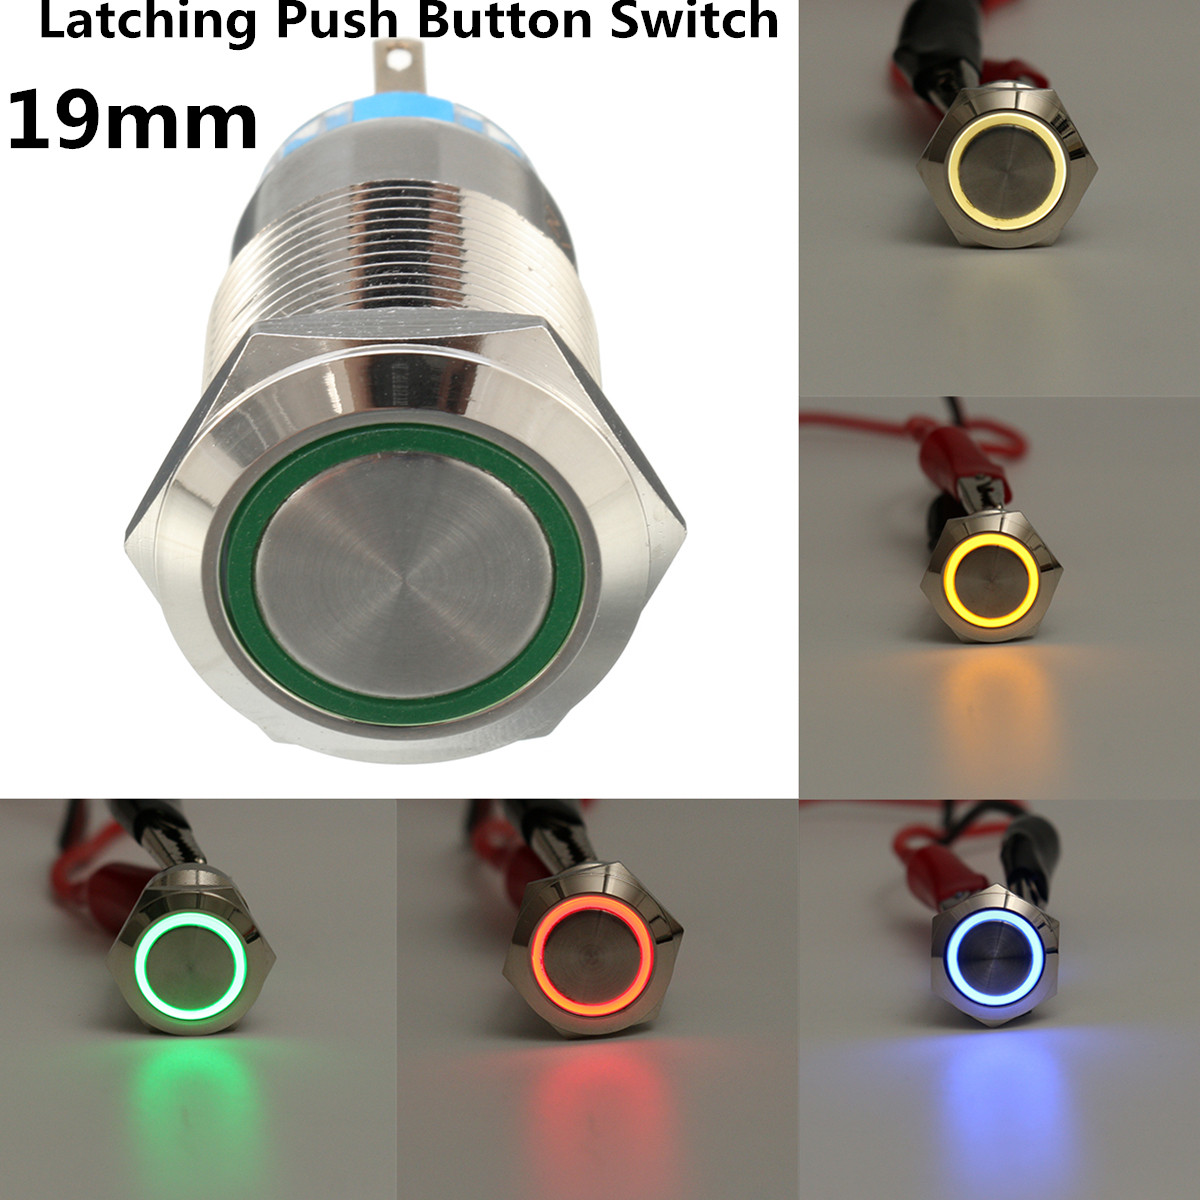 5 Pin 19mm LED Light Illuminated Push Button Latching Switch SPDT Waterproof